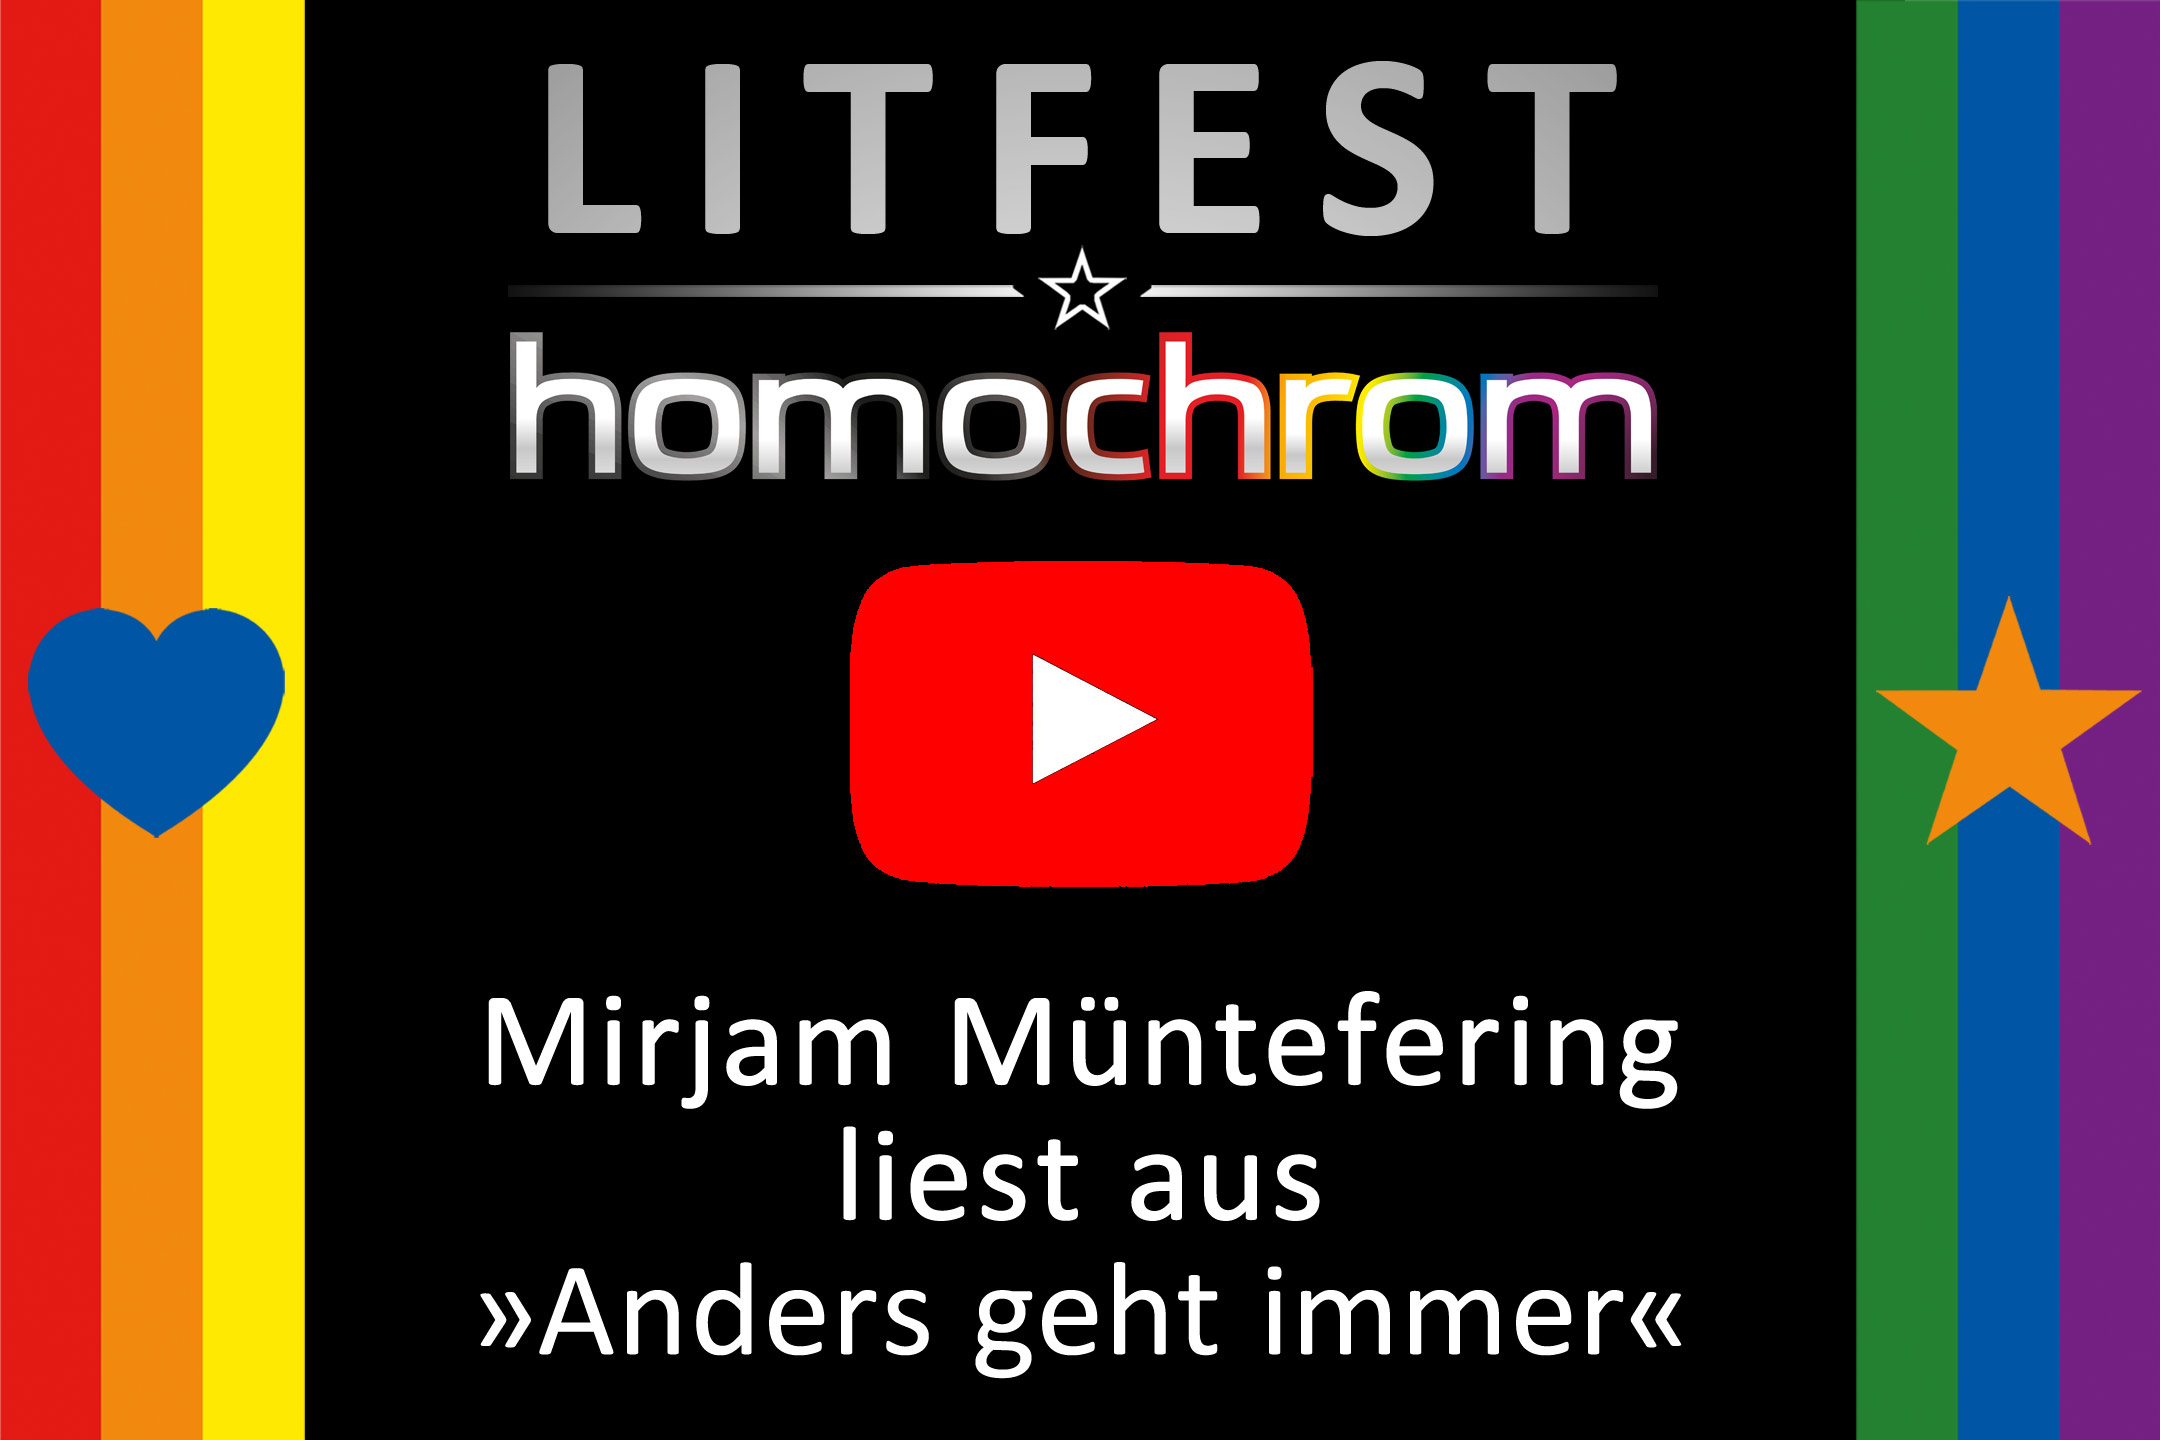 Playlist Litfest homochrom